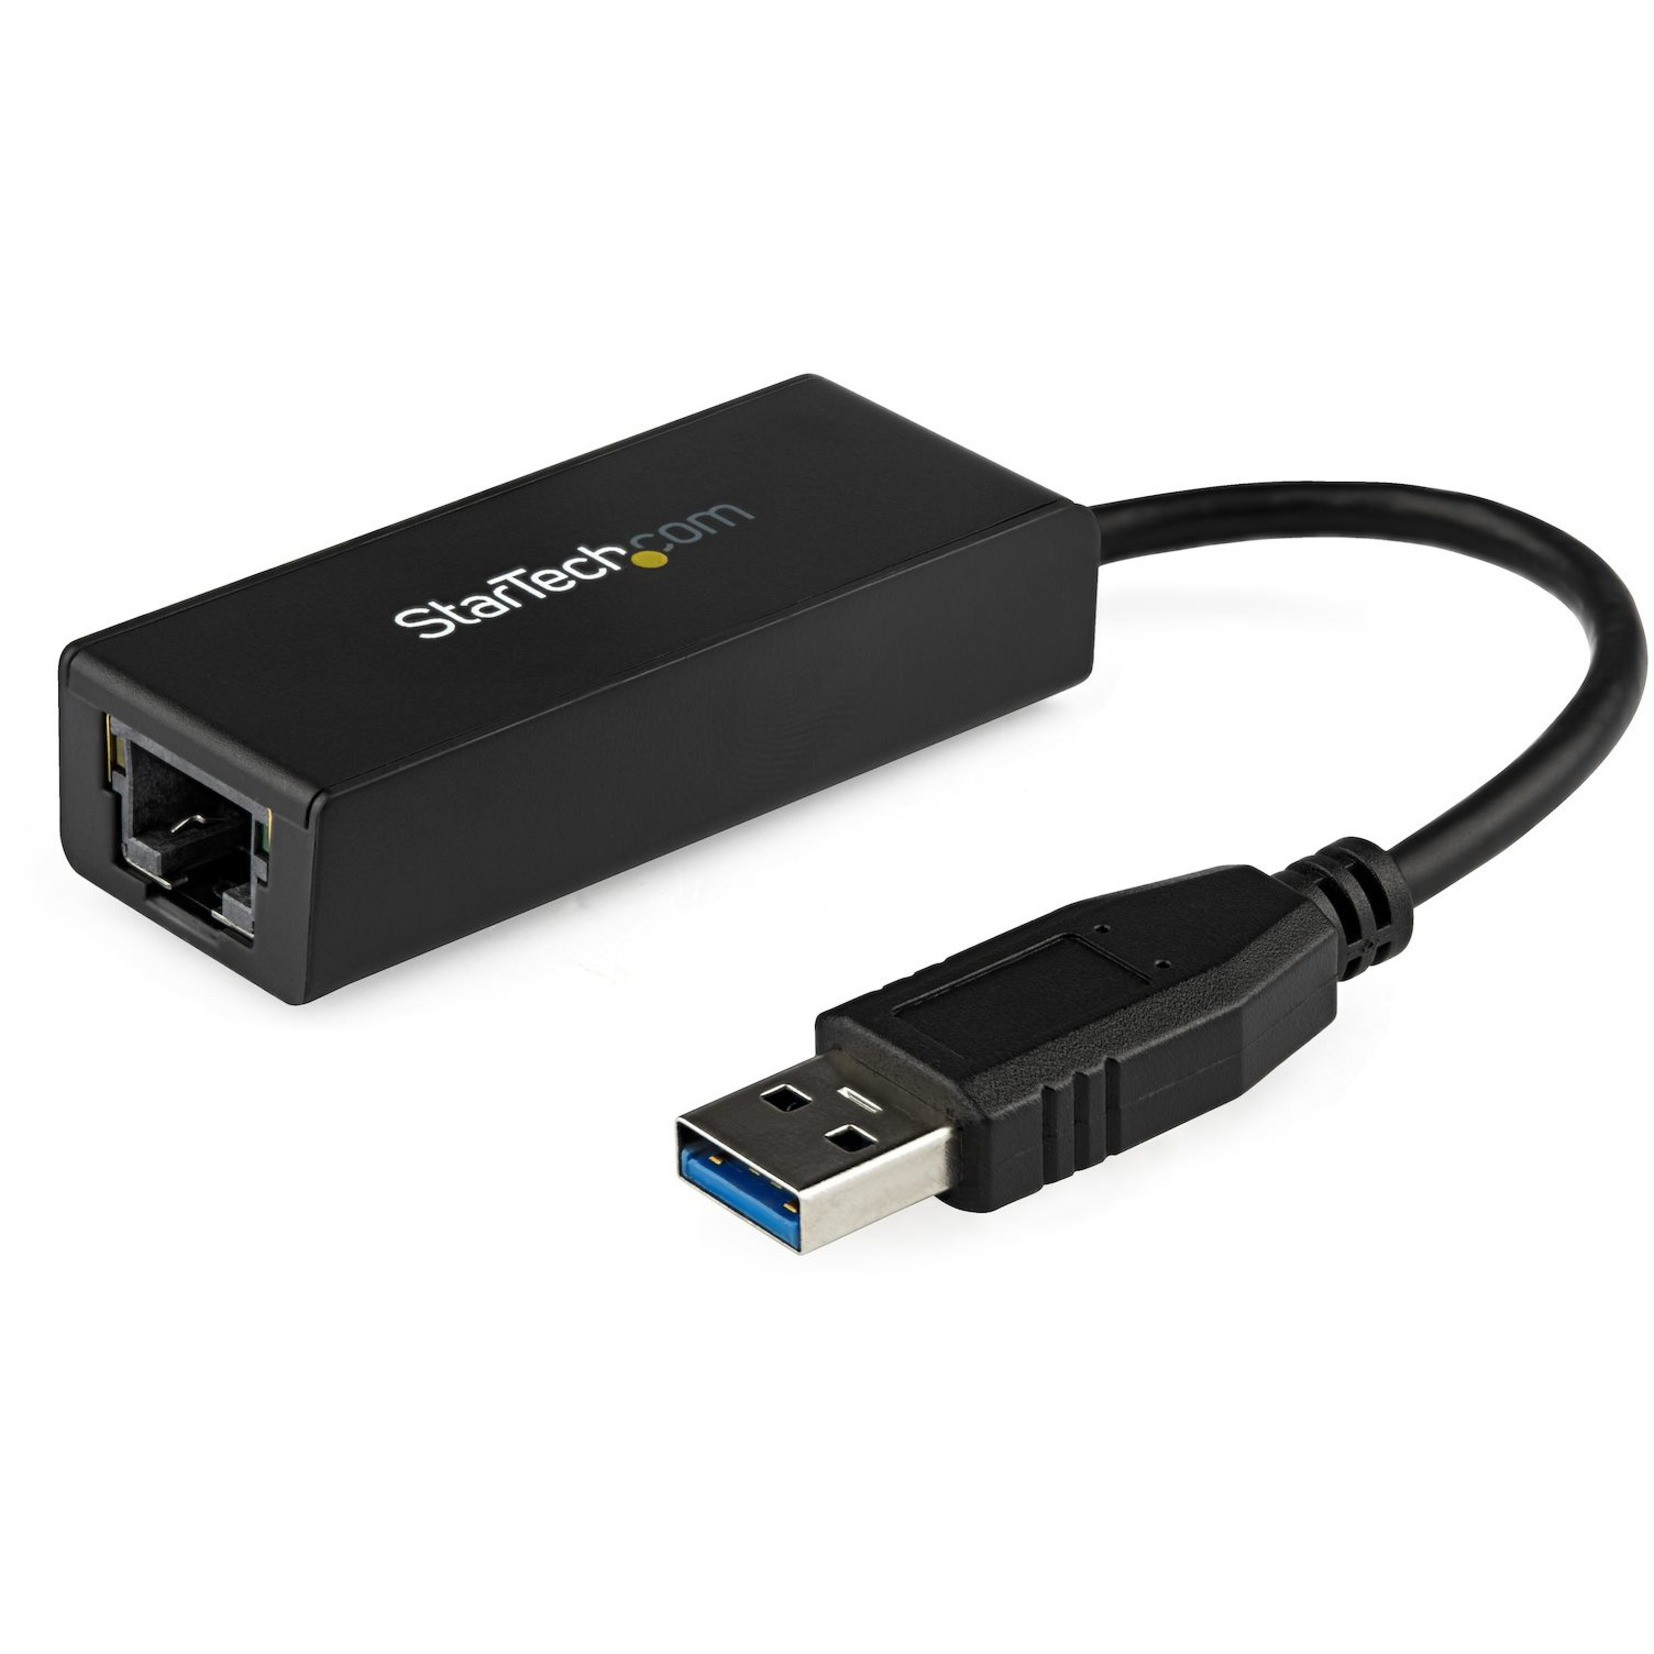 Startech .com USB 3.0 to Gigabit Ethernet NIC Network AdapterAdd